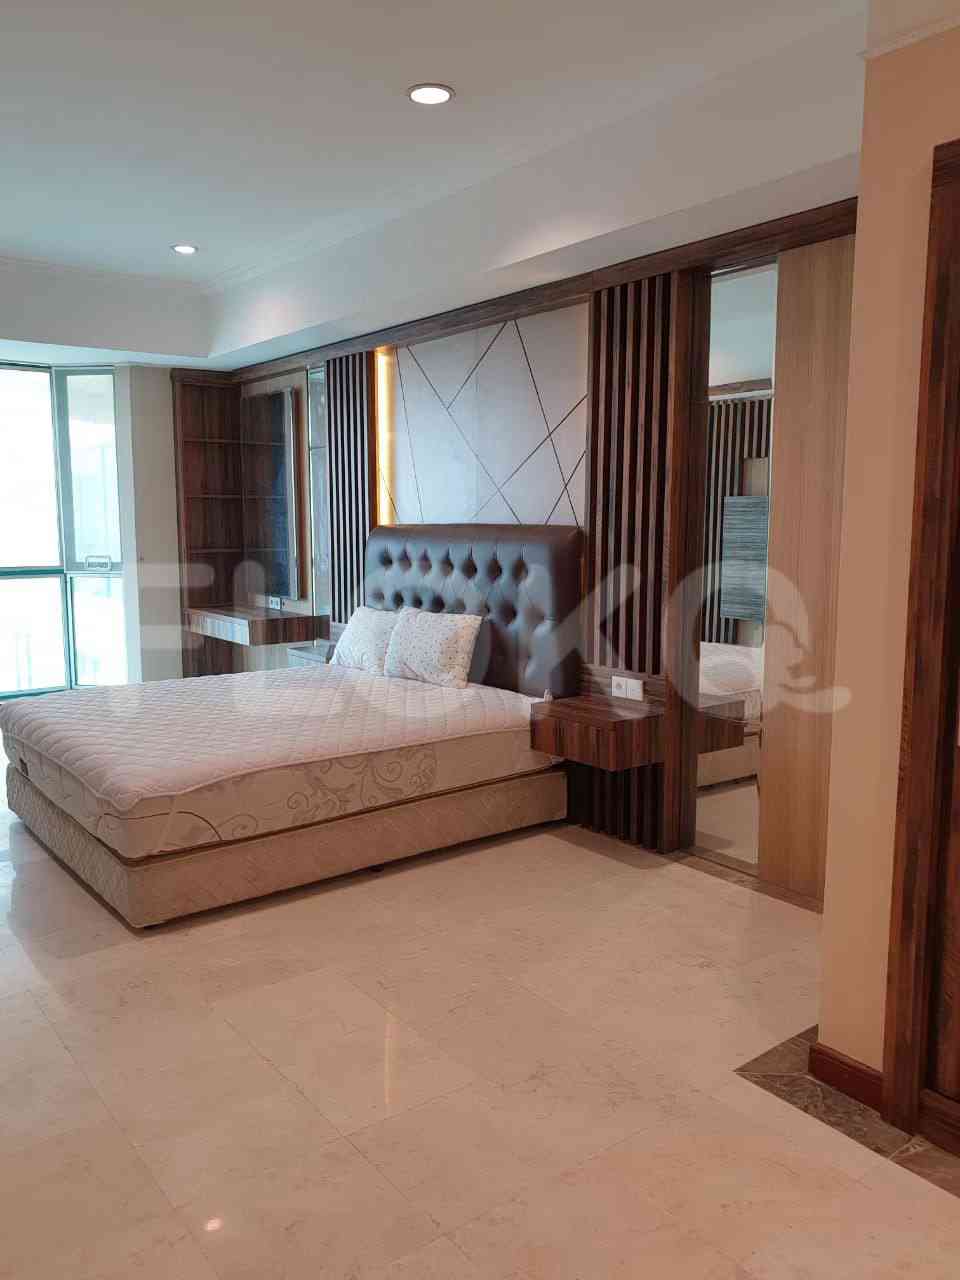 3 Bedroom on 15th Floor for Rent in Casablanca Apartment - ftebc2 3